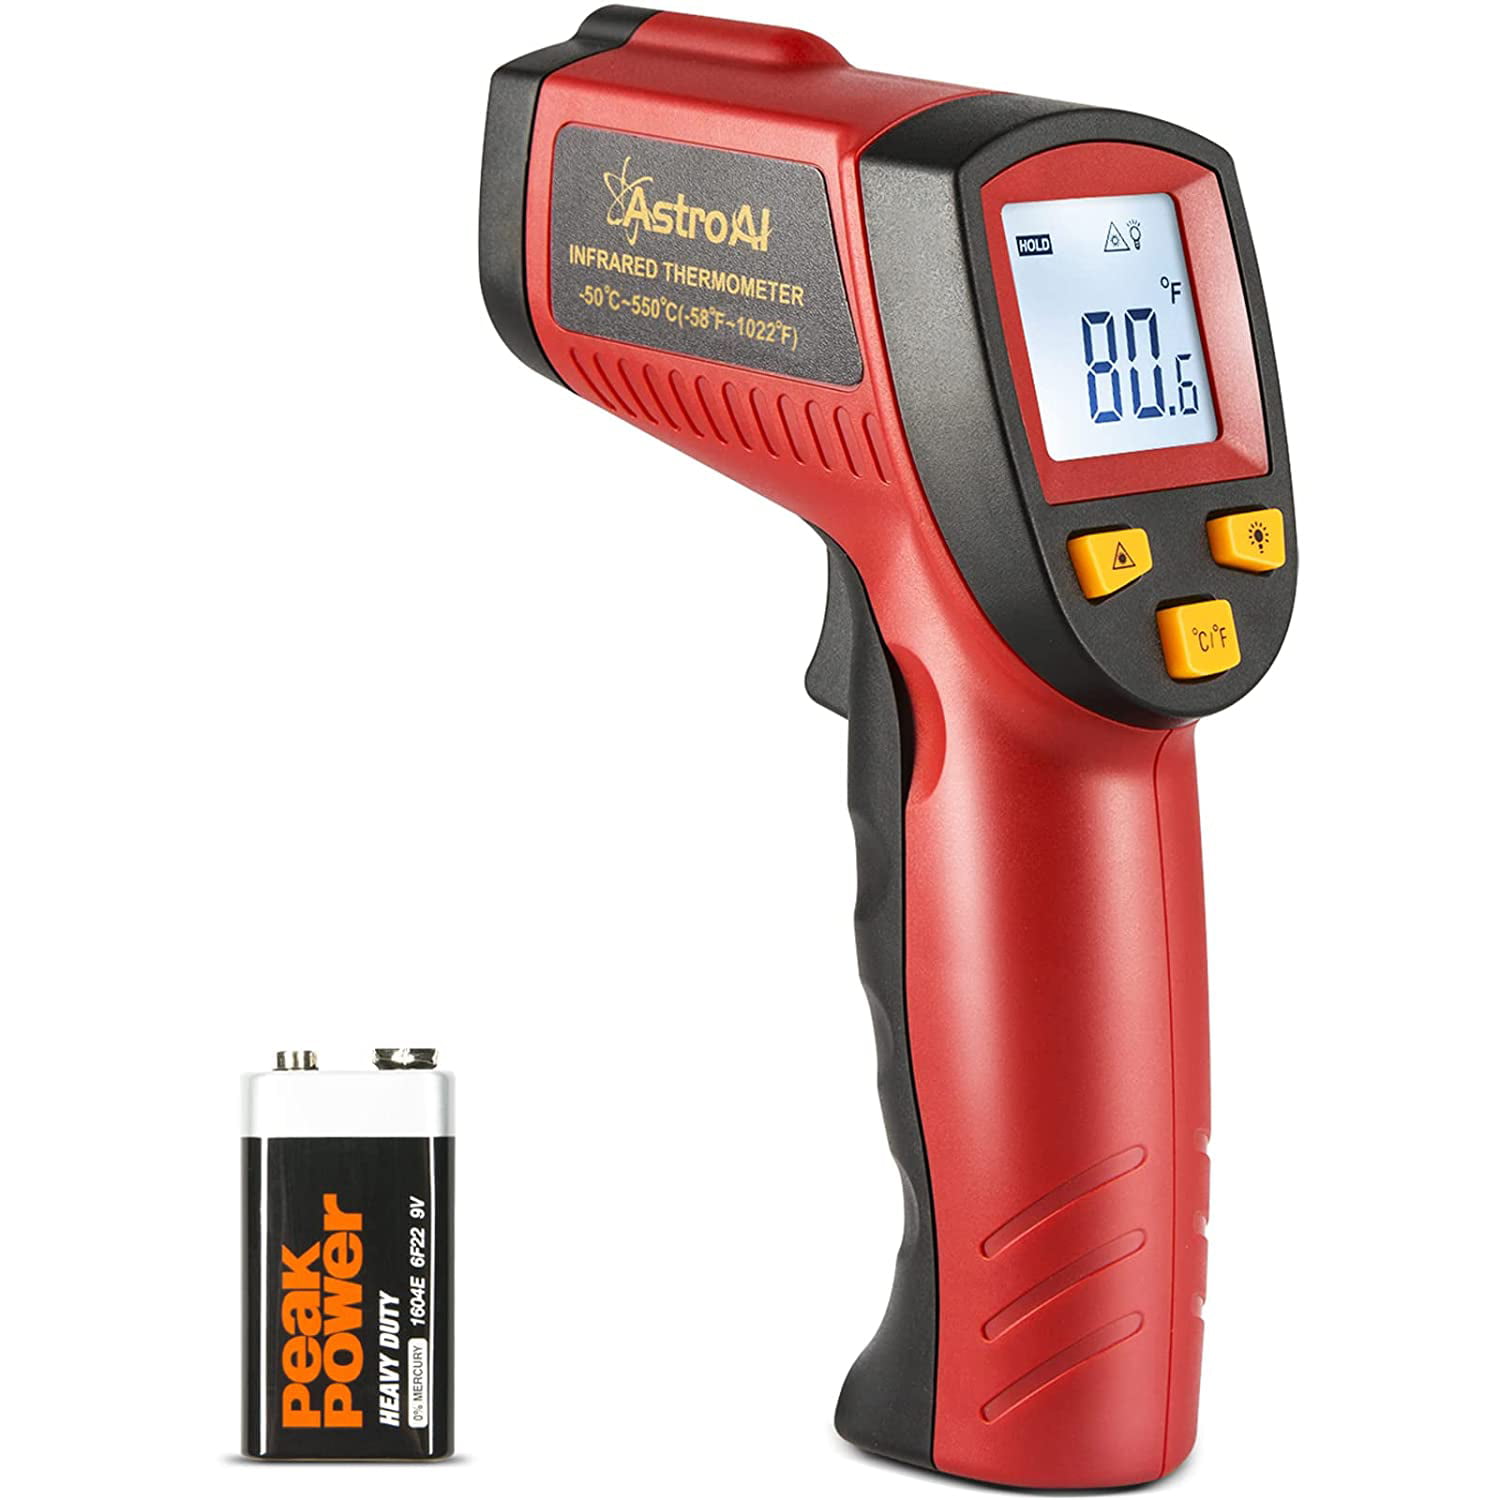 AstroAI Digital Infrared Thermometer 550, Laser Temperature Gun